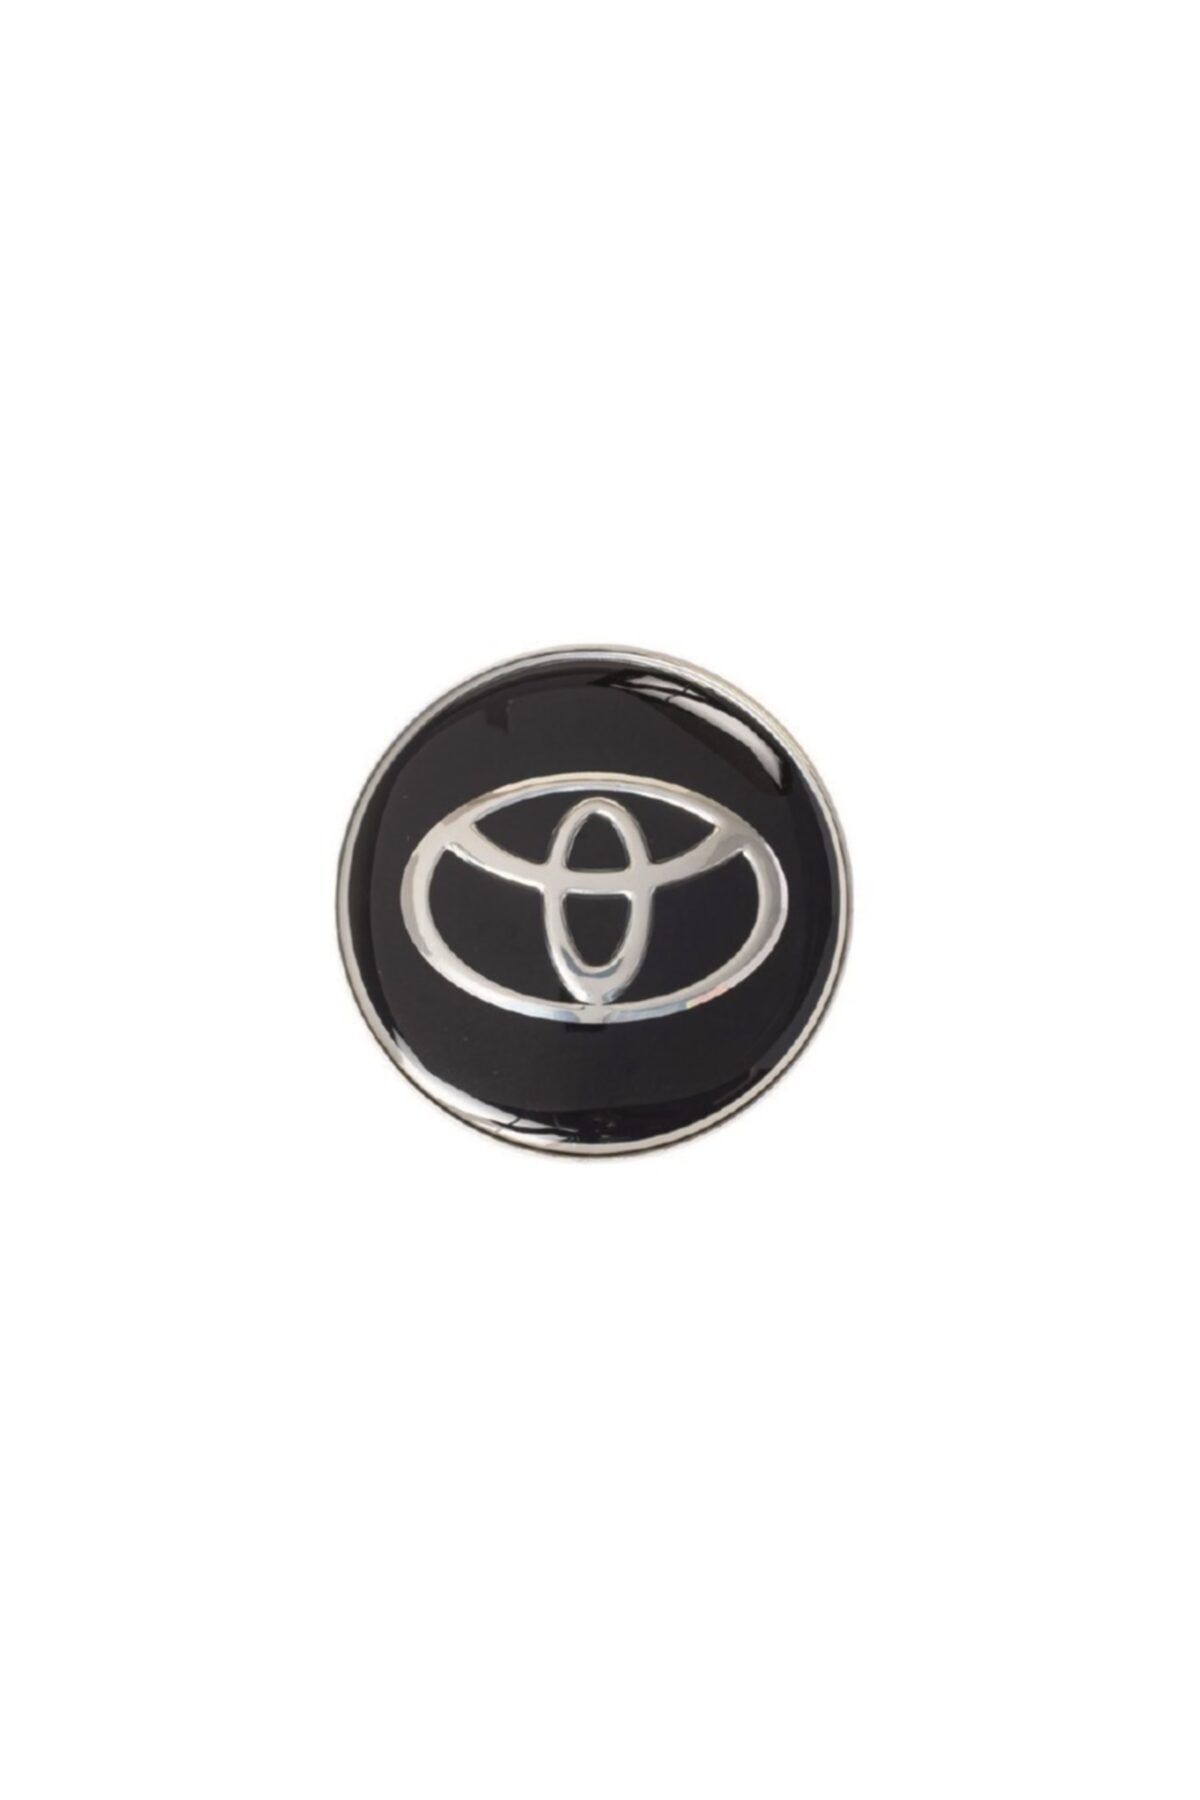 İTAQİ Toyota Corolla Uyumlu Jant Göbek Siyah 2017-2020